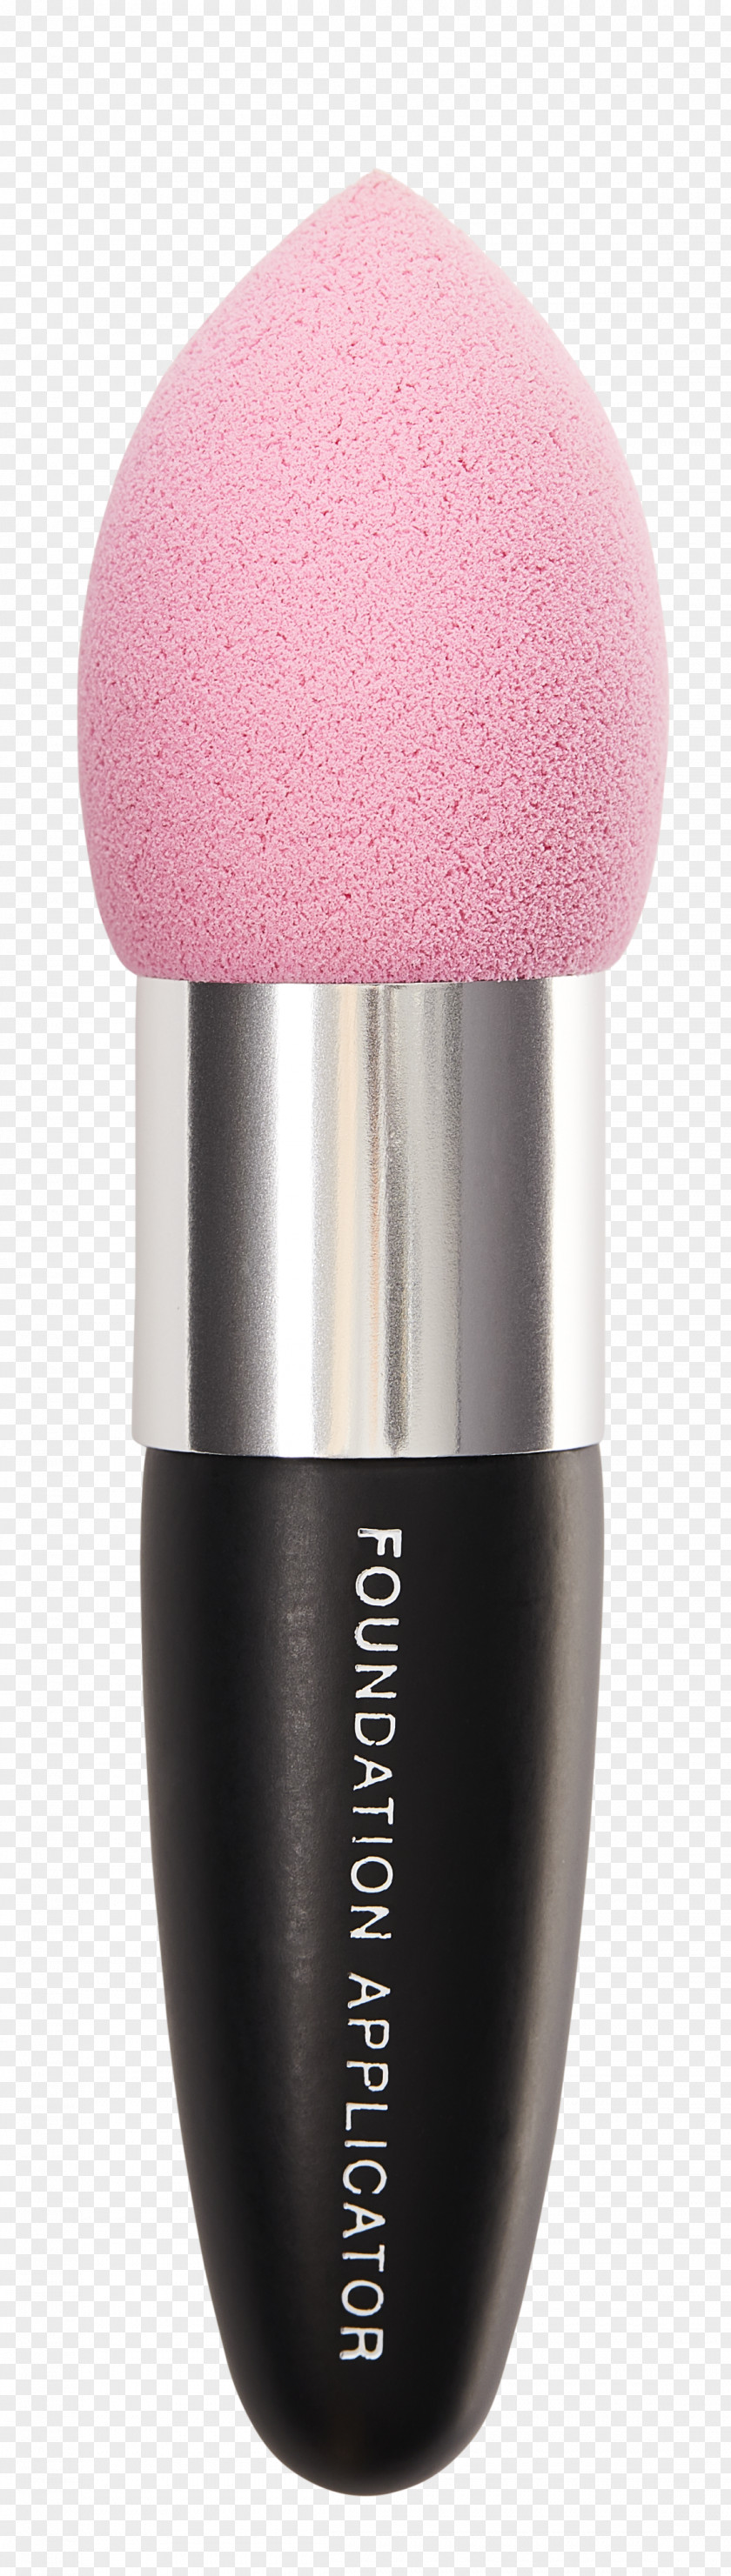 Design Brush Cosmetics Face Powder PNG